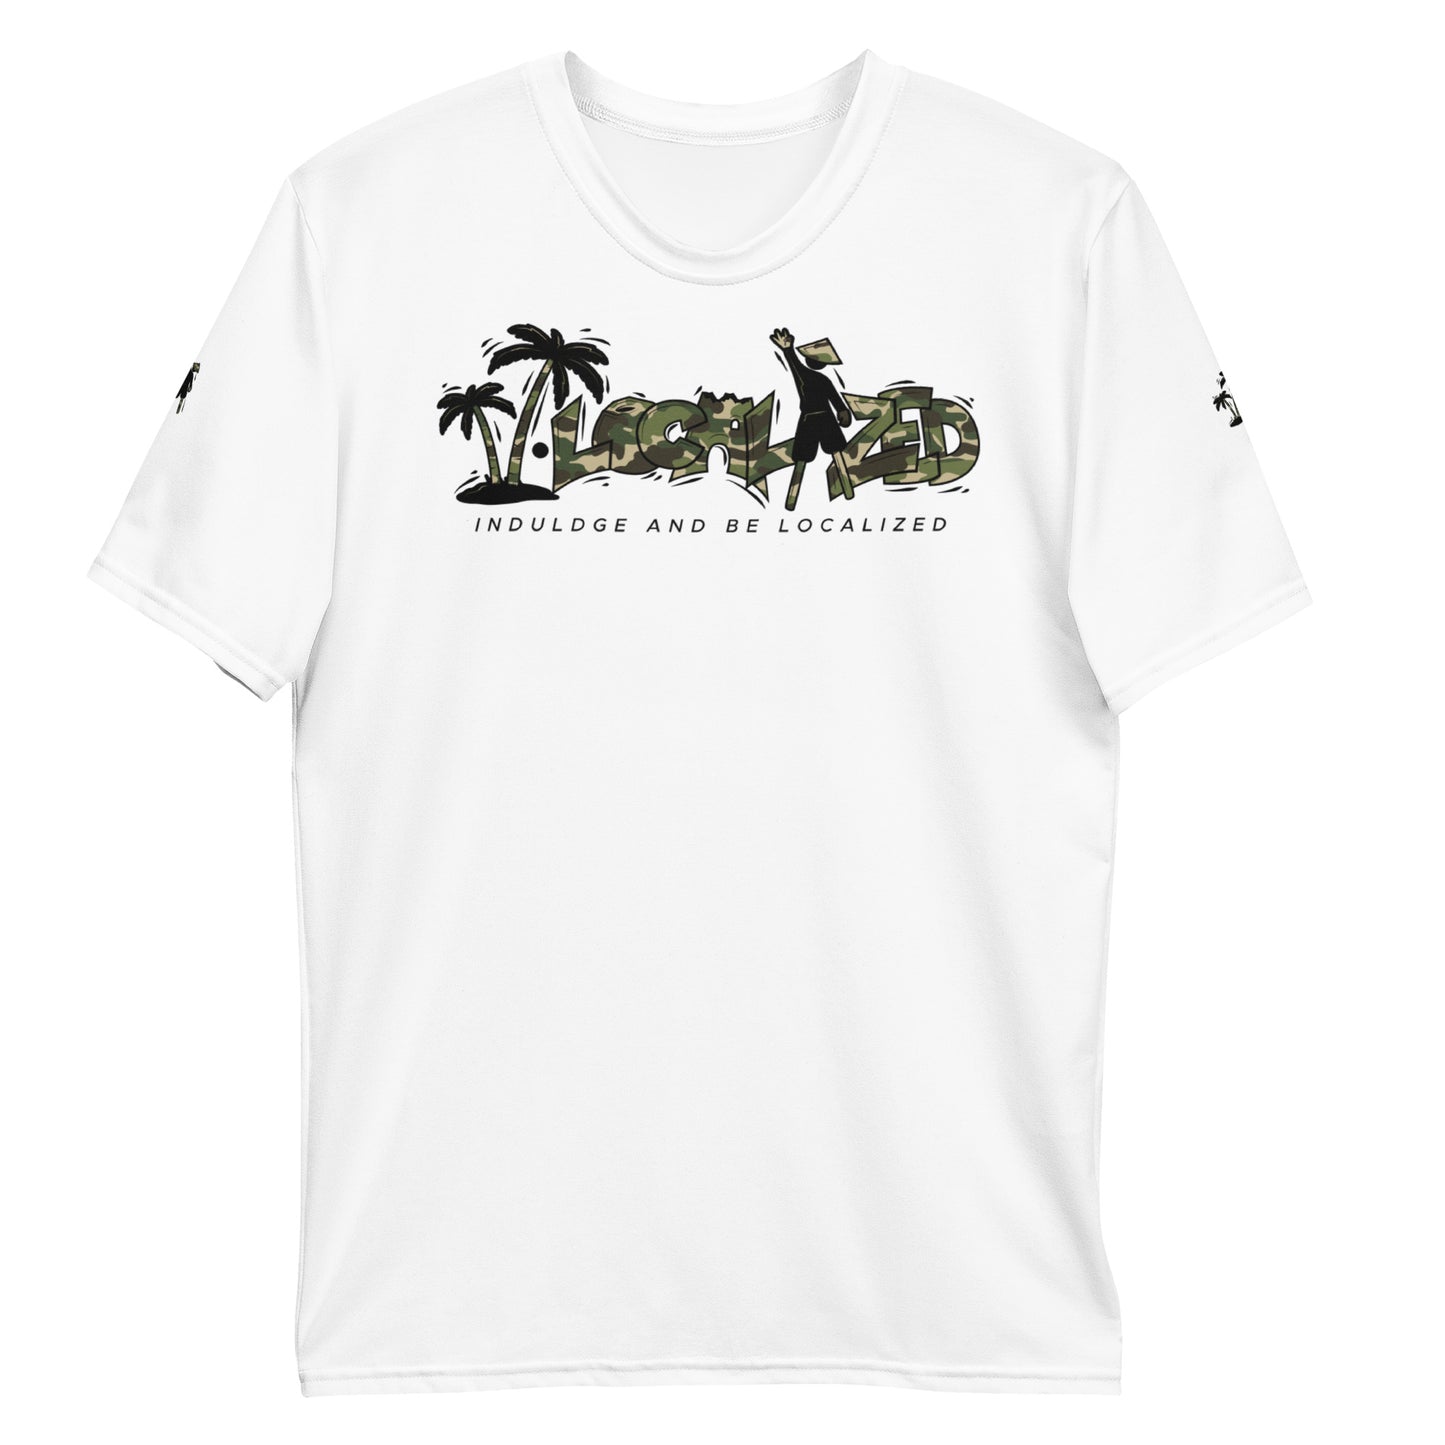 White V.Localized (Camo) Men’s Dry-Fit T-Shirt